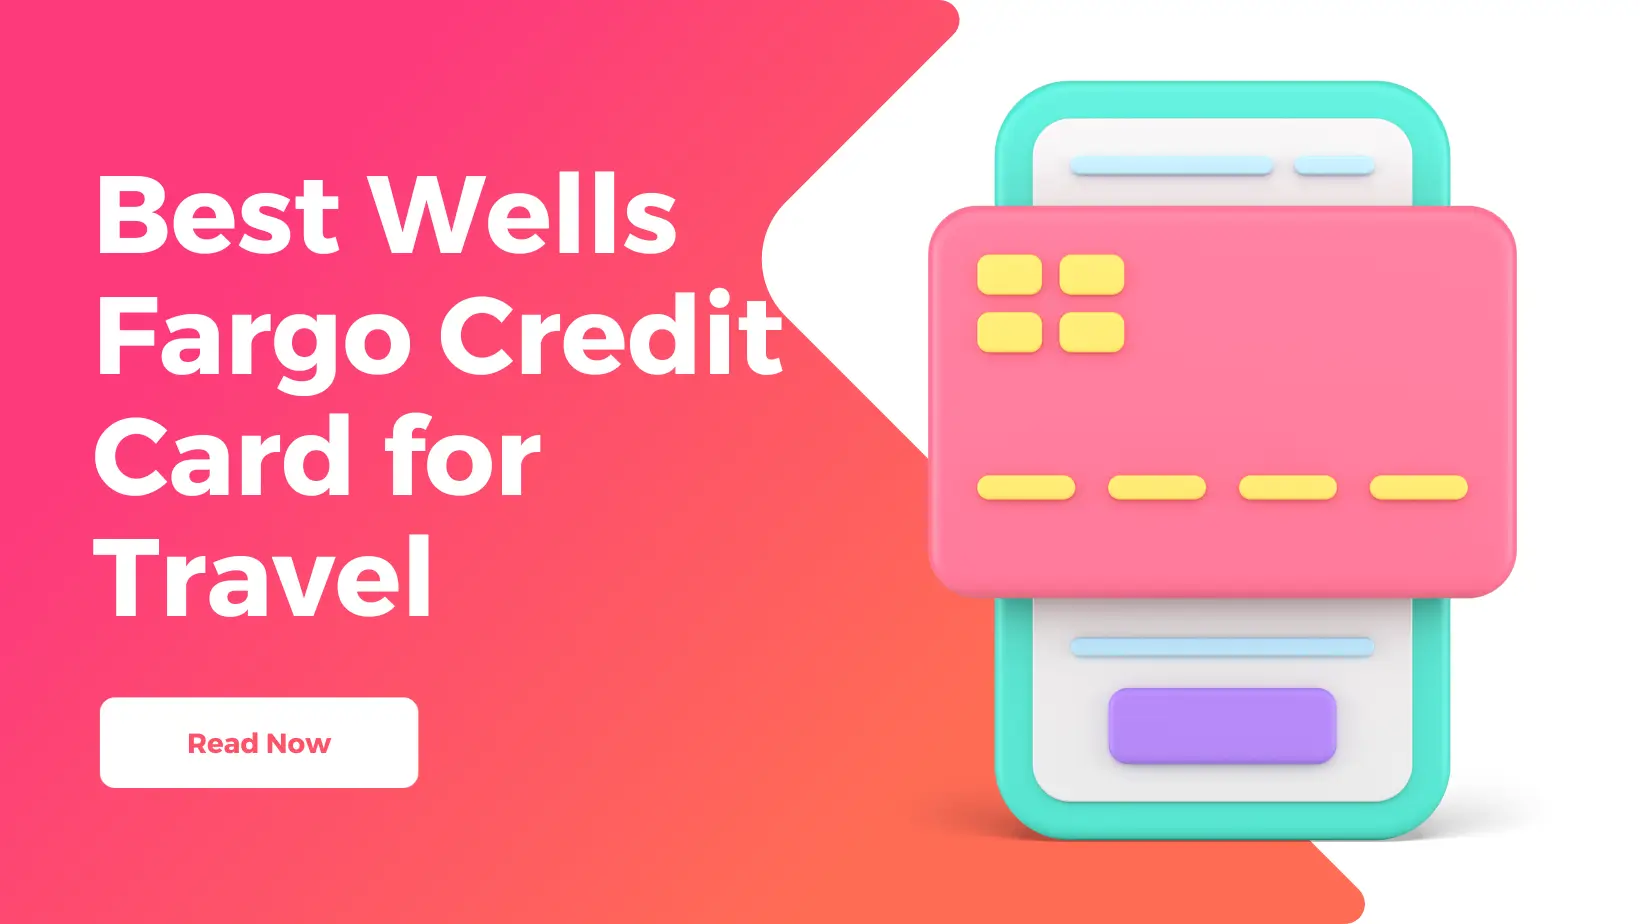 Best Wells Fargo Credit Card for Travel